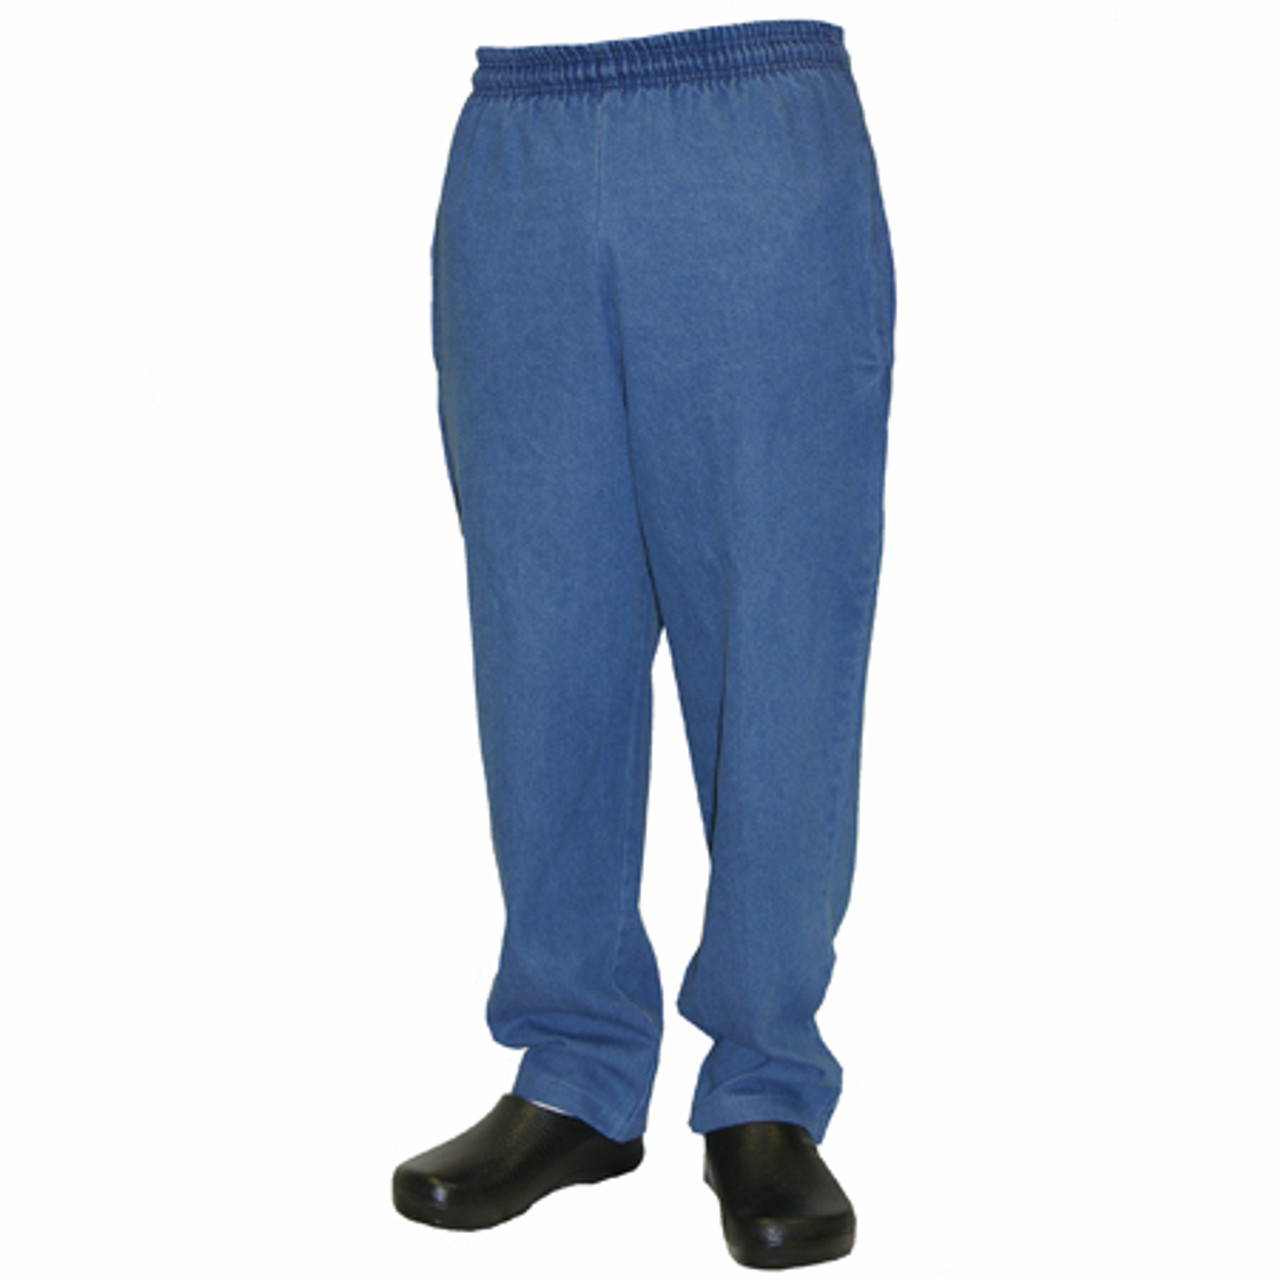 Classic Chef Pants in 100% Cotton Blue Denim, 7101-3148